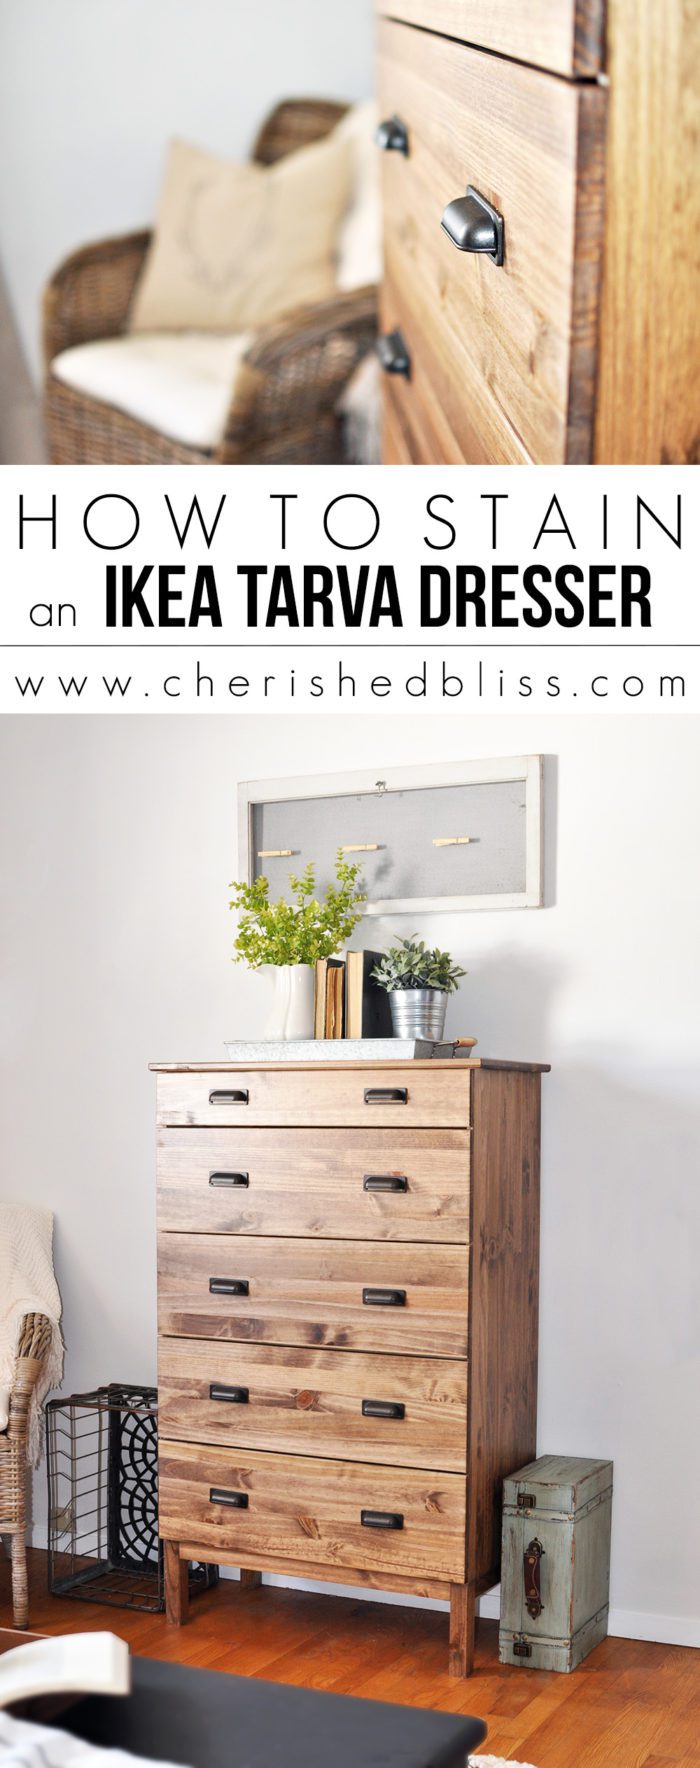 Ikea Hack | How to Stain an Ikea Tarva Dresser